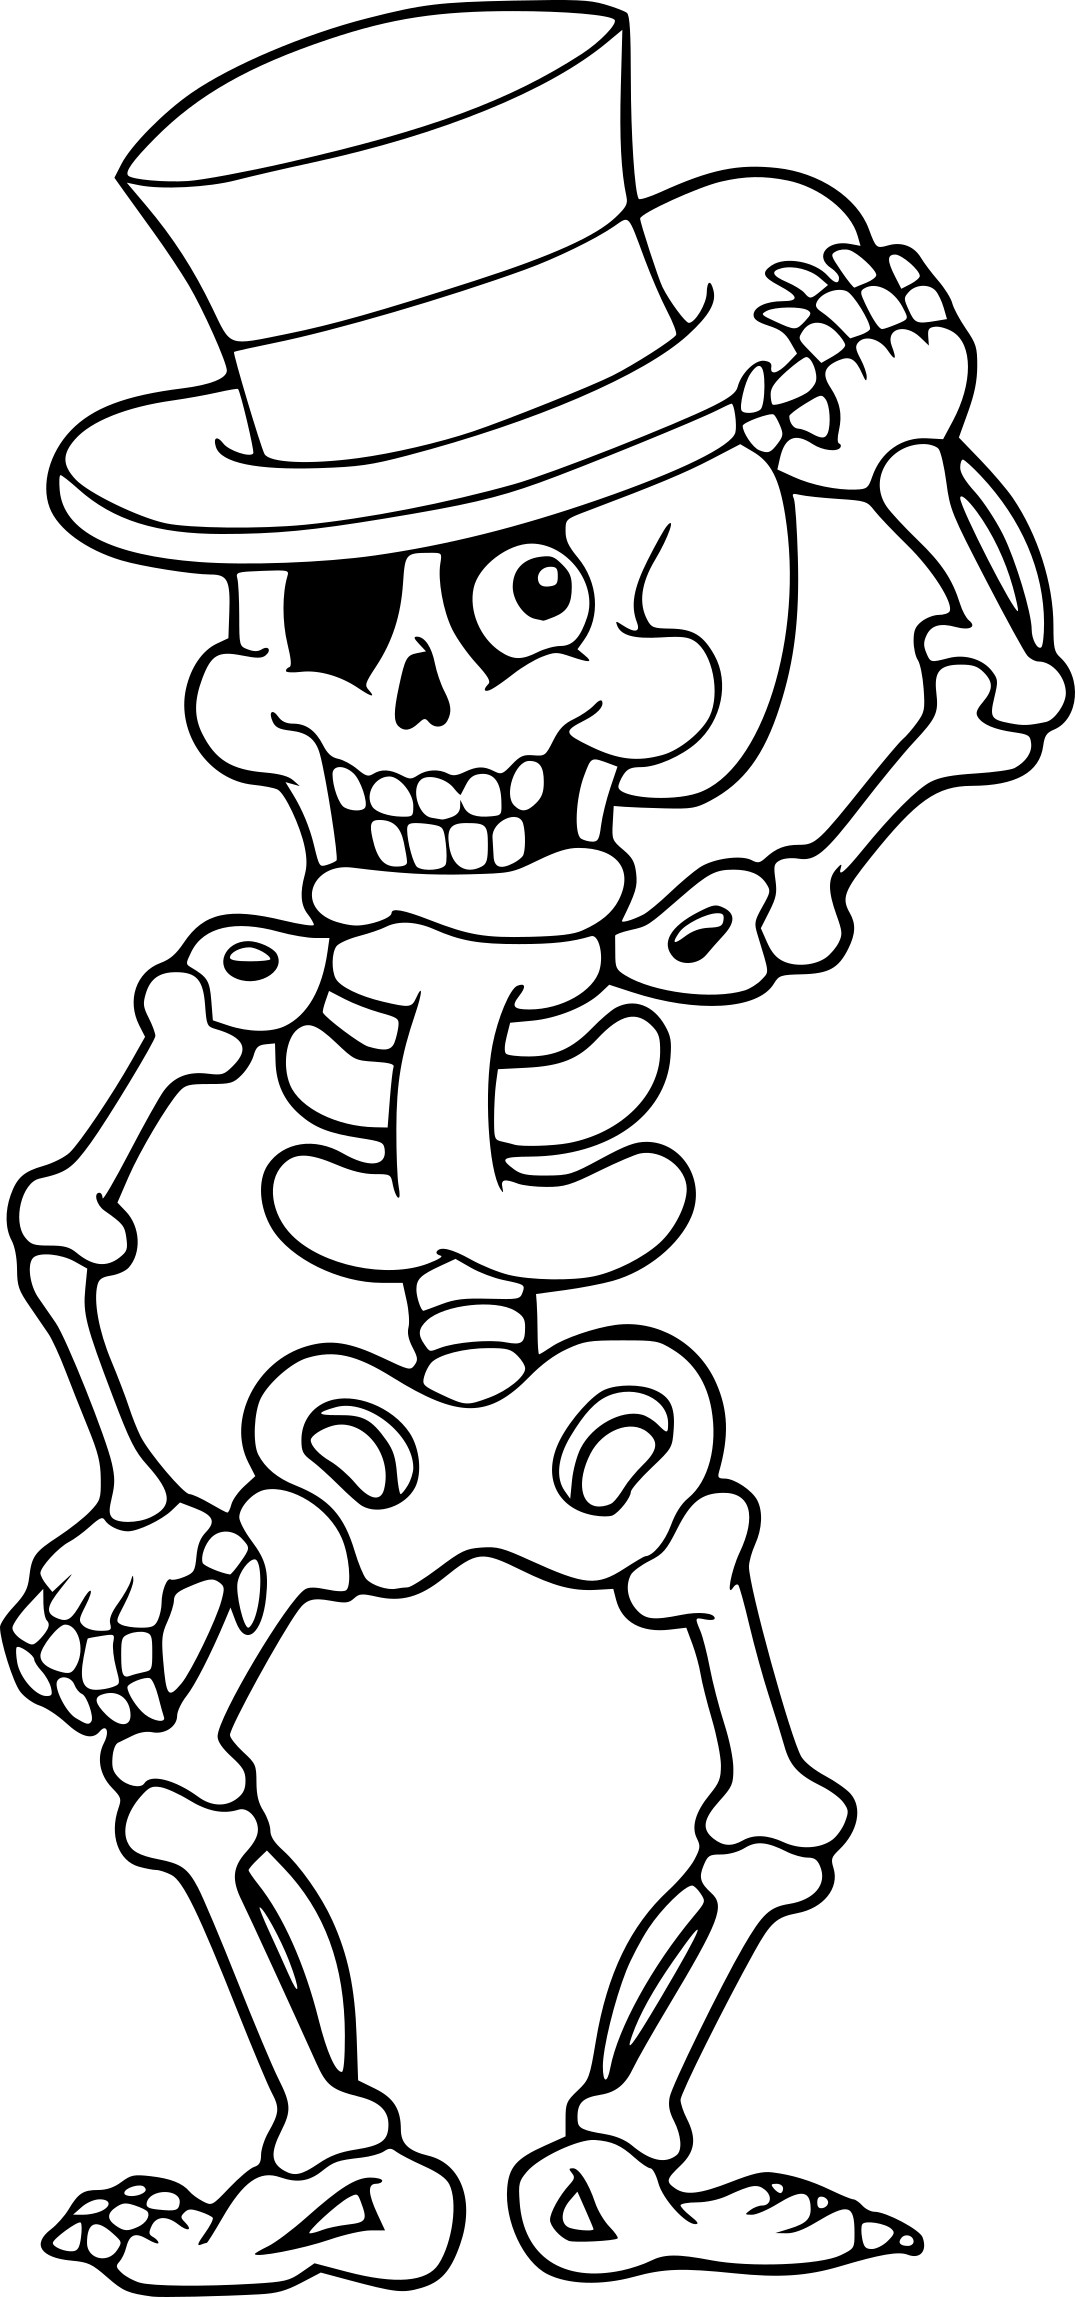 Halloween Skeleton coloring page